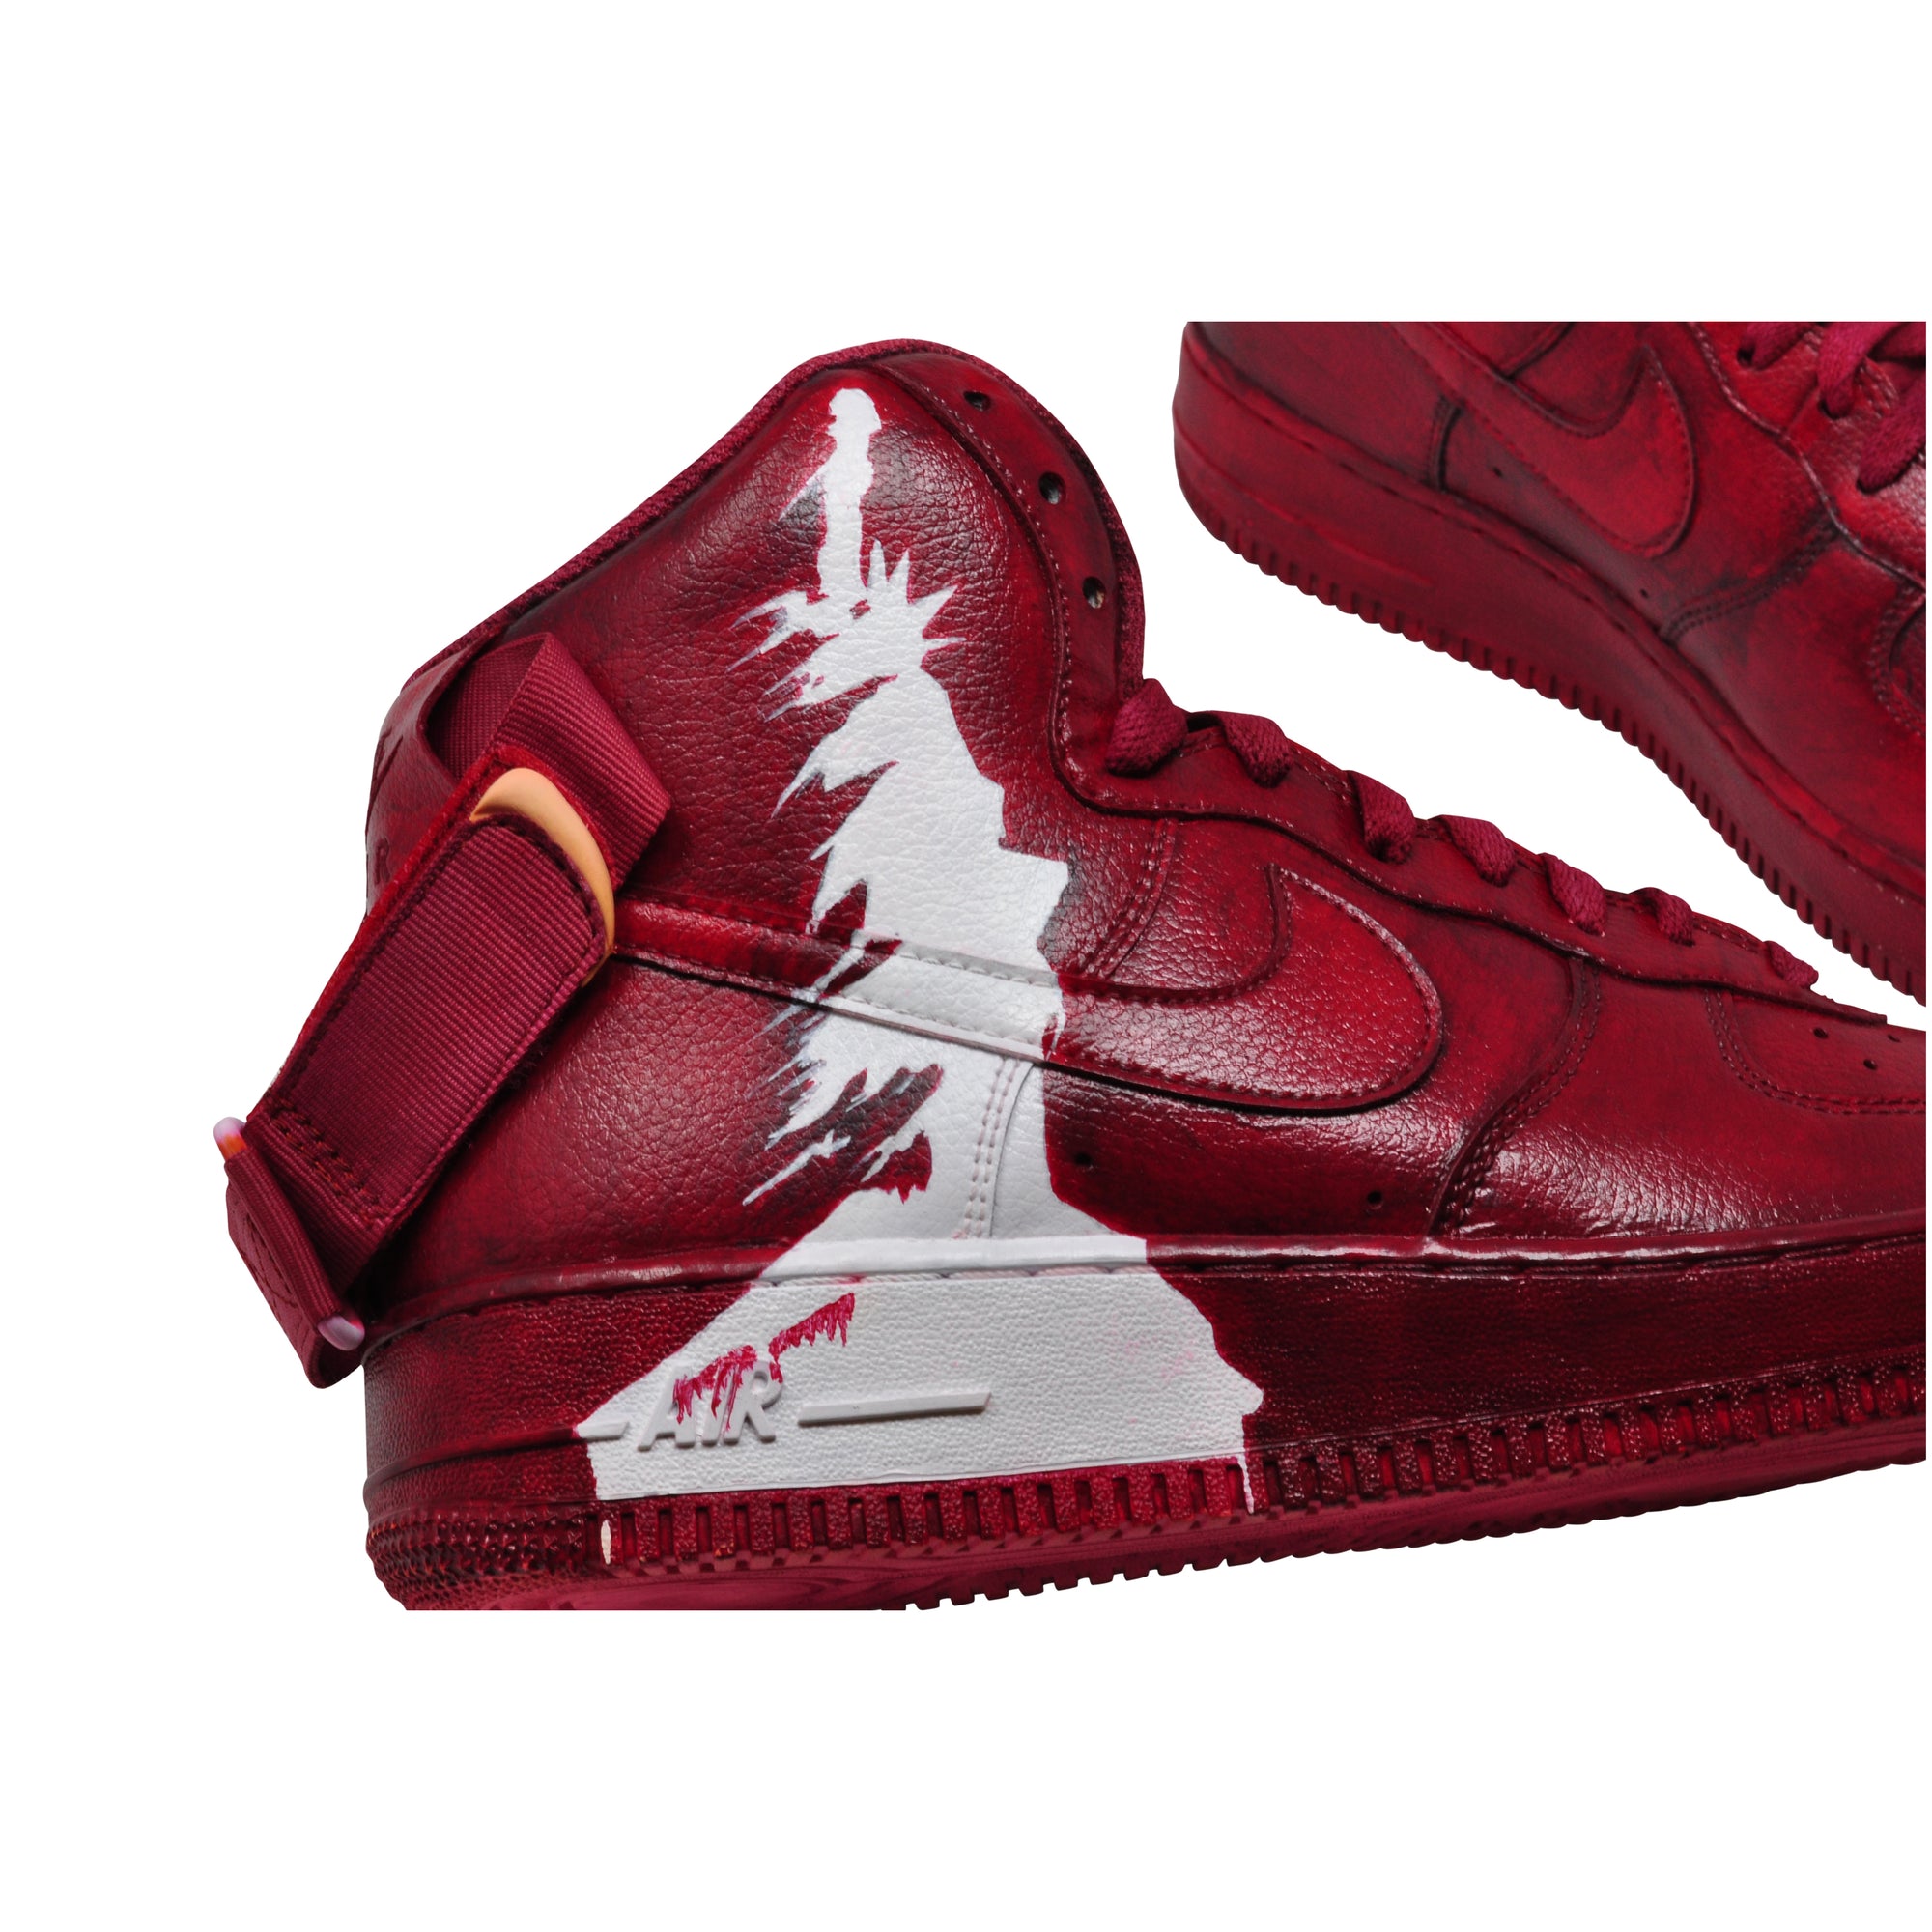 Nike Air Force 1 Splatter Gray Red Blood Custom Shoes Sneakers